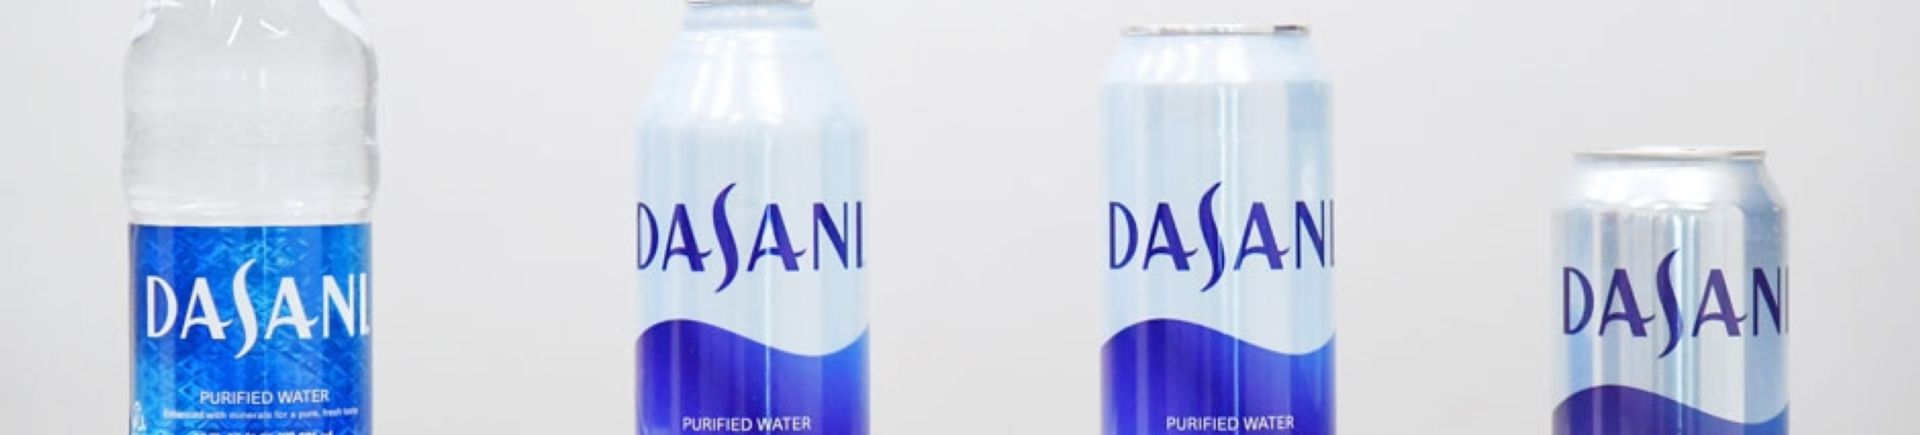 DASANI-Purified Water